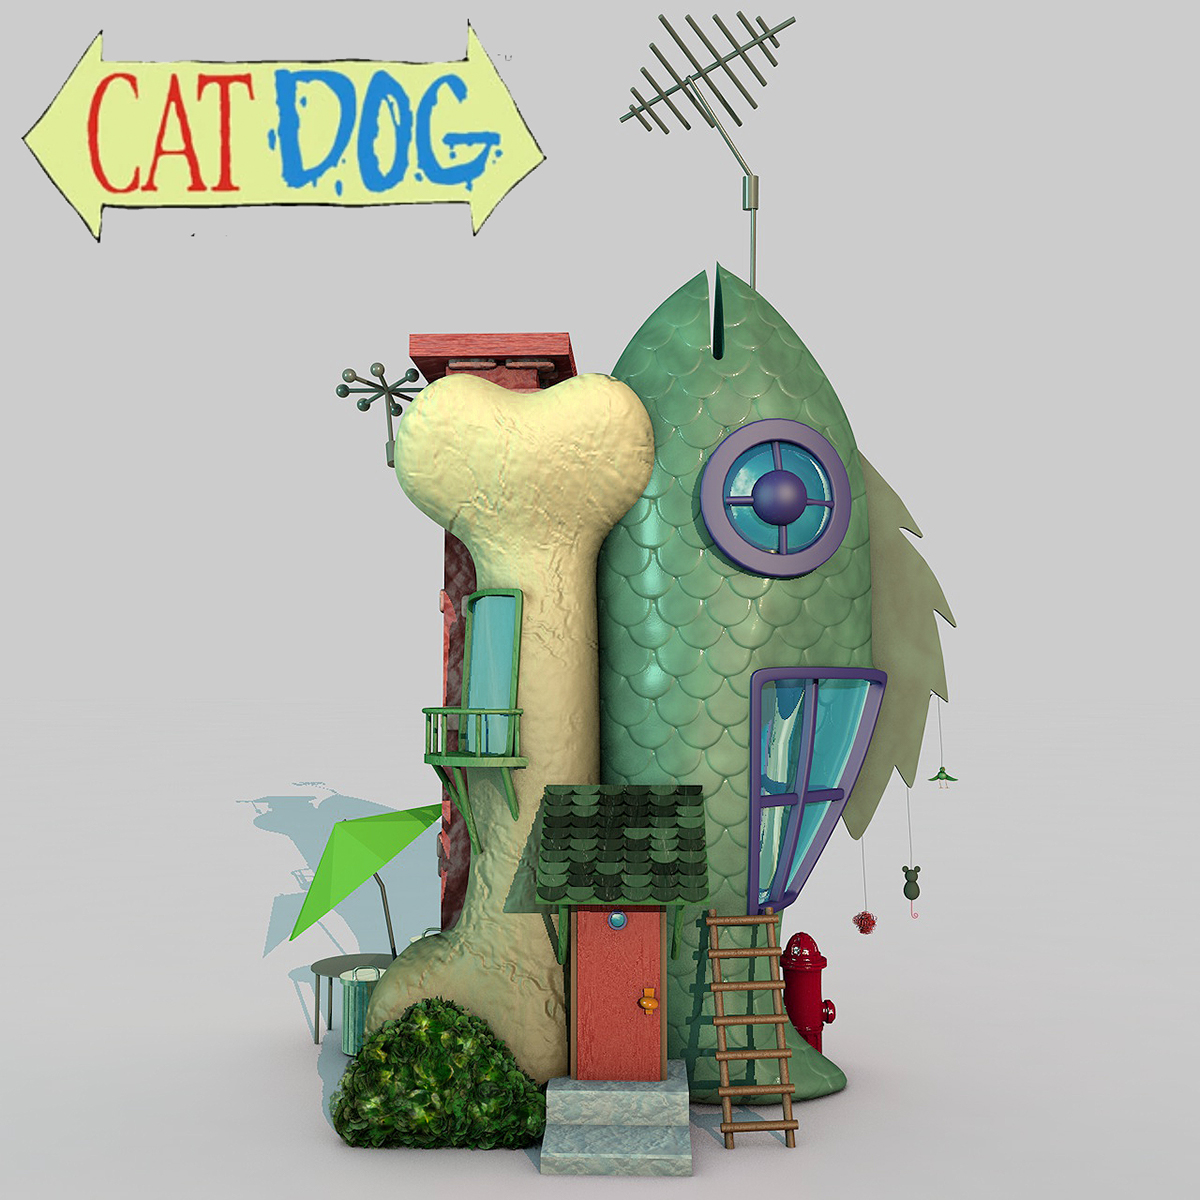 Catdog's house on Behance